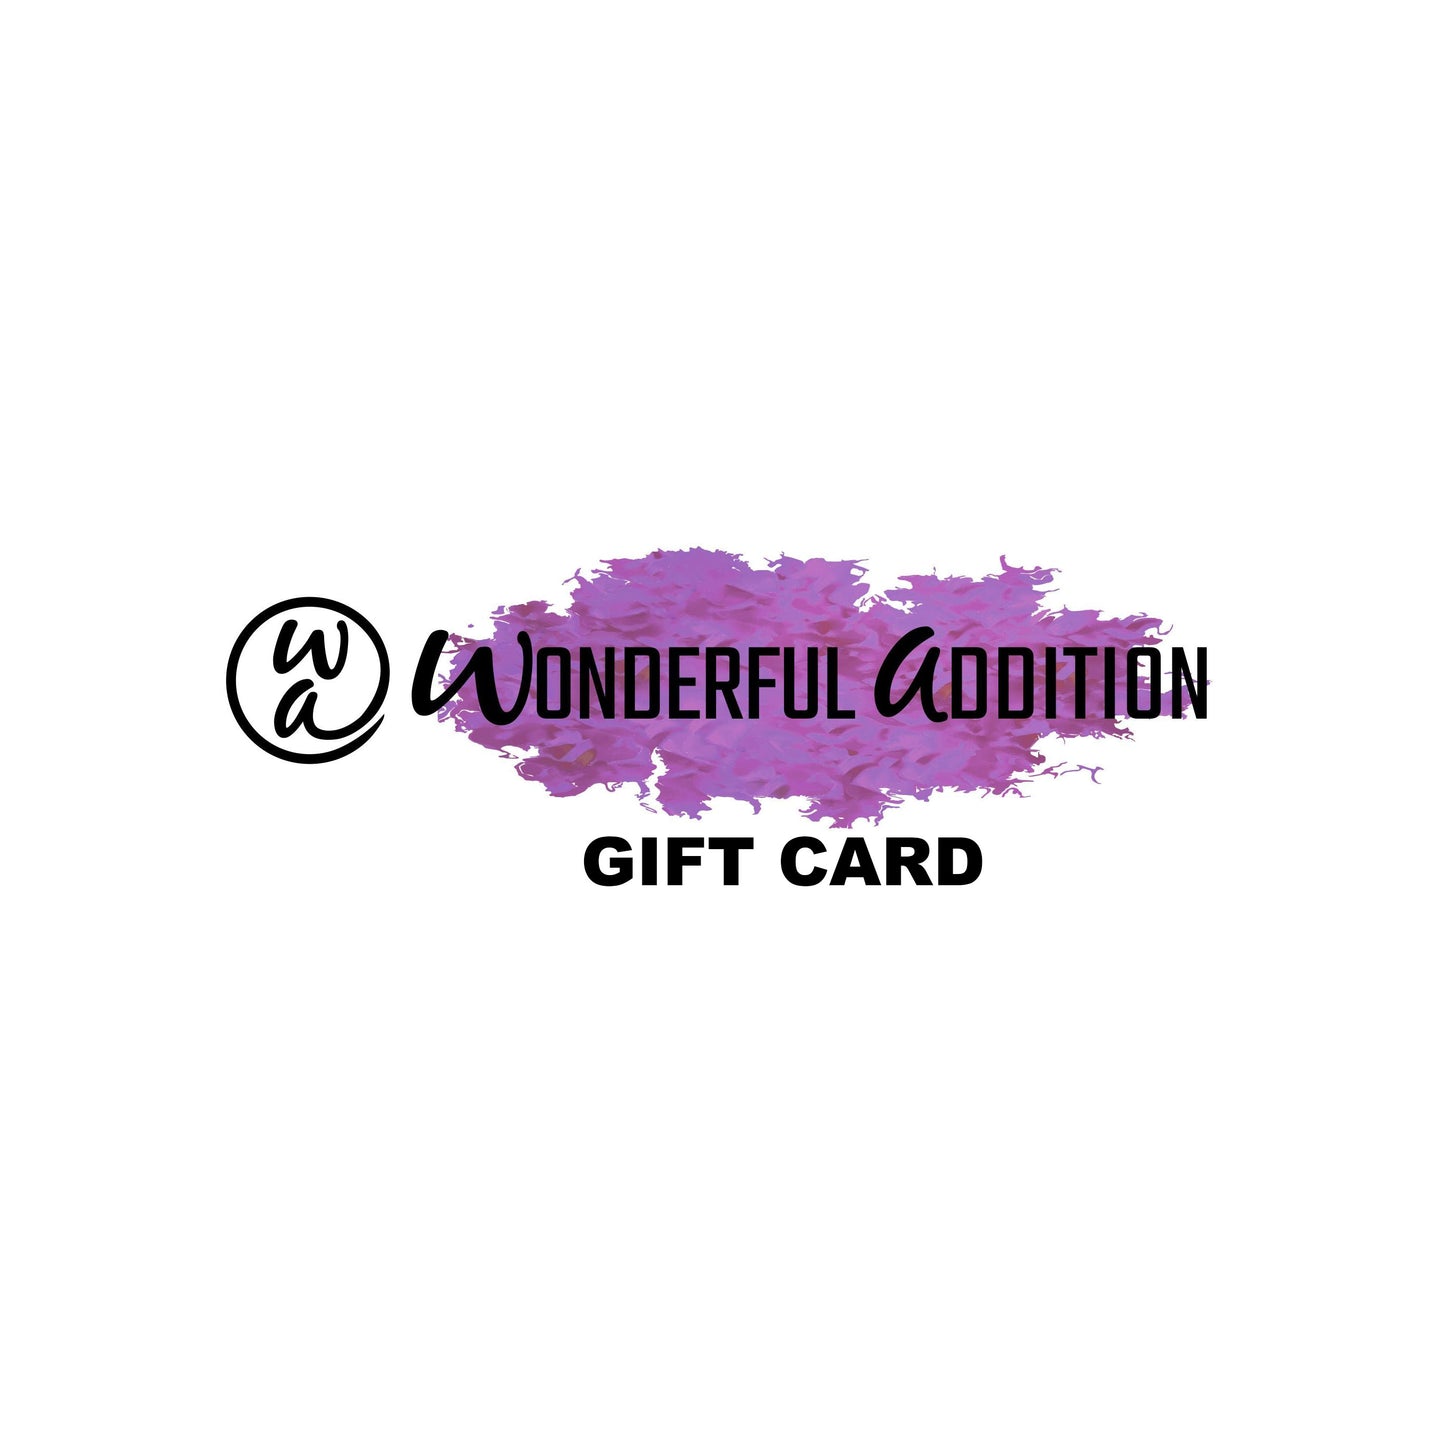 Gift Cards - $150.00 - Wonderful Addition